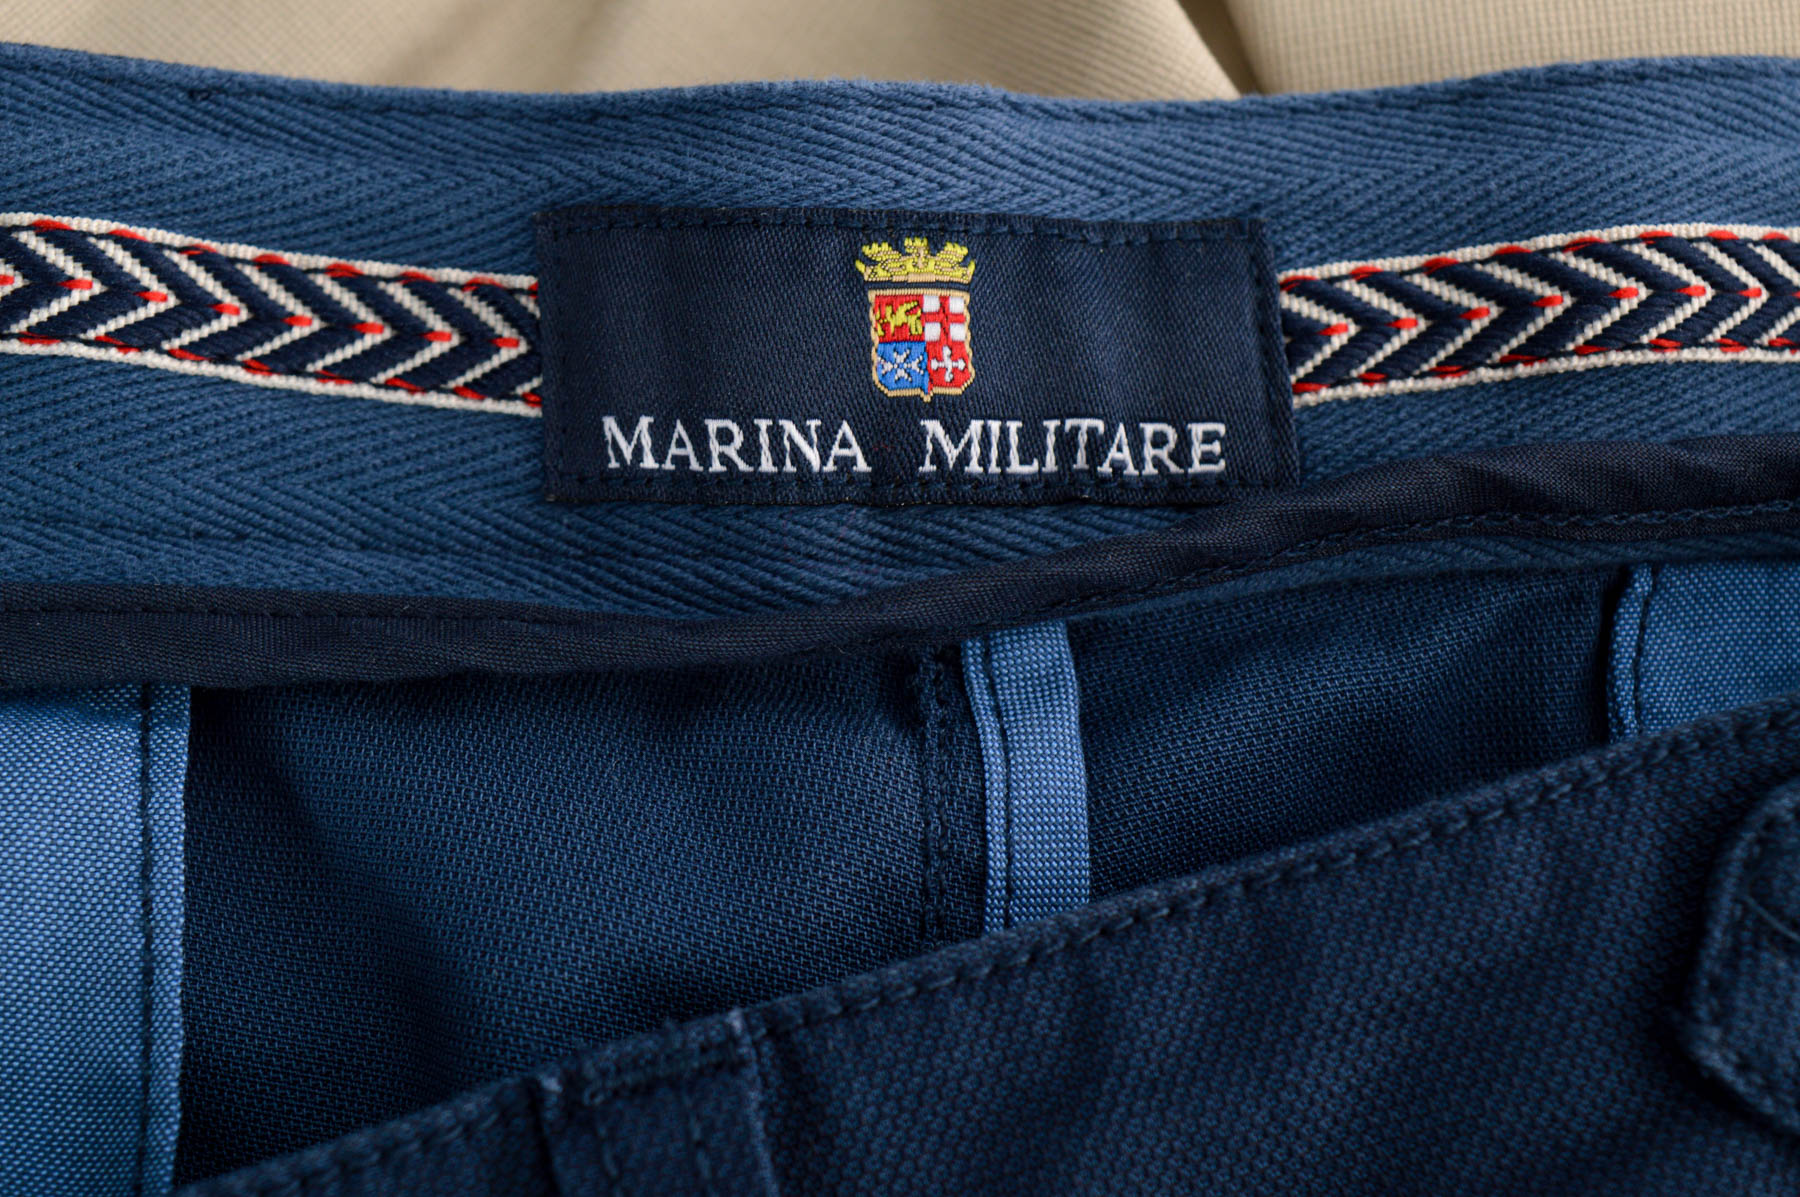 Men's trousers - Marina Militare - 2